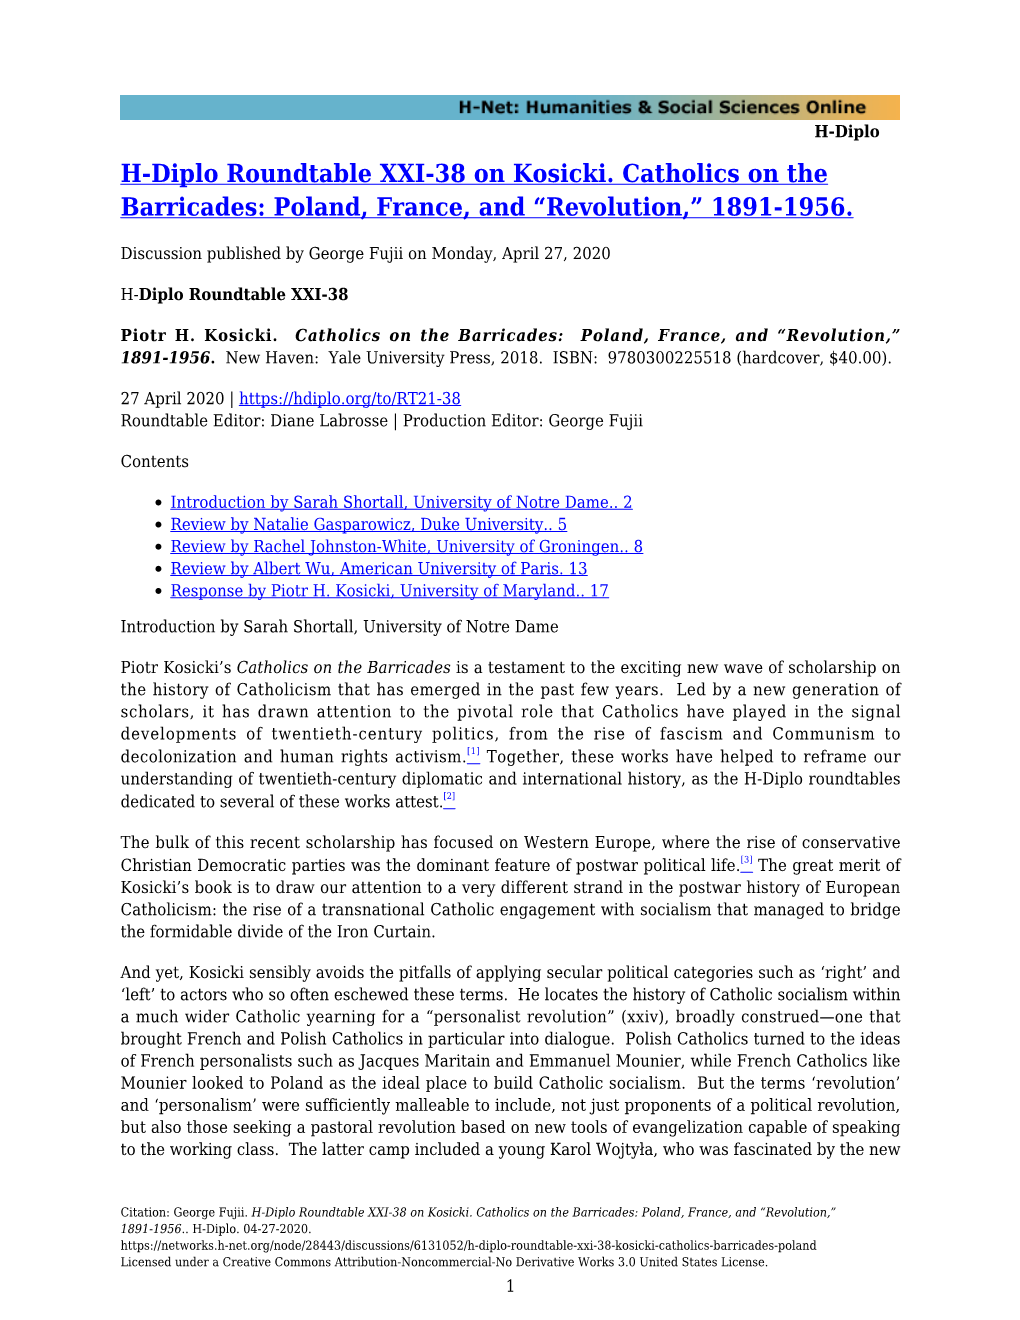 H-Diplo Roundtable XXI-38 on Kosicki. Catholics on the Barricades: Poland, France, and “Revolution,” 1891-1956